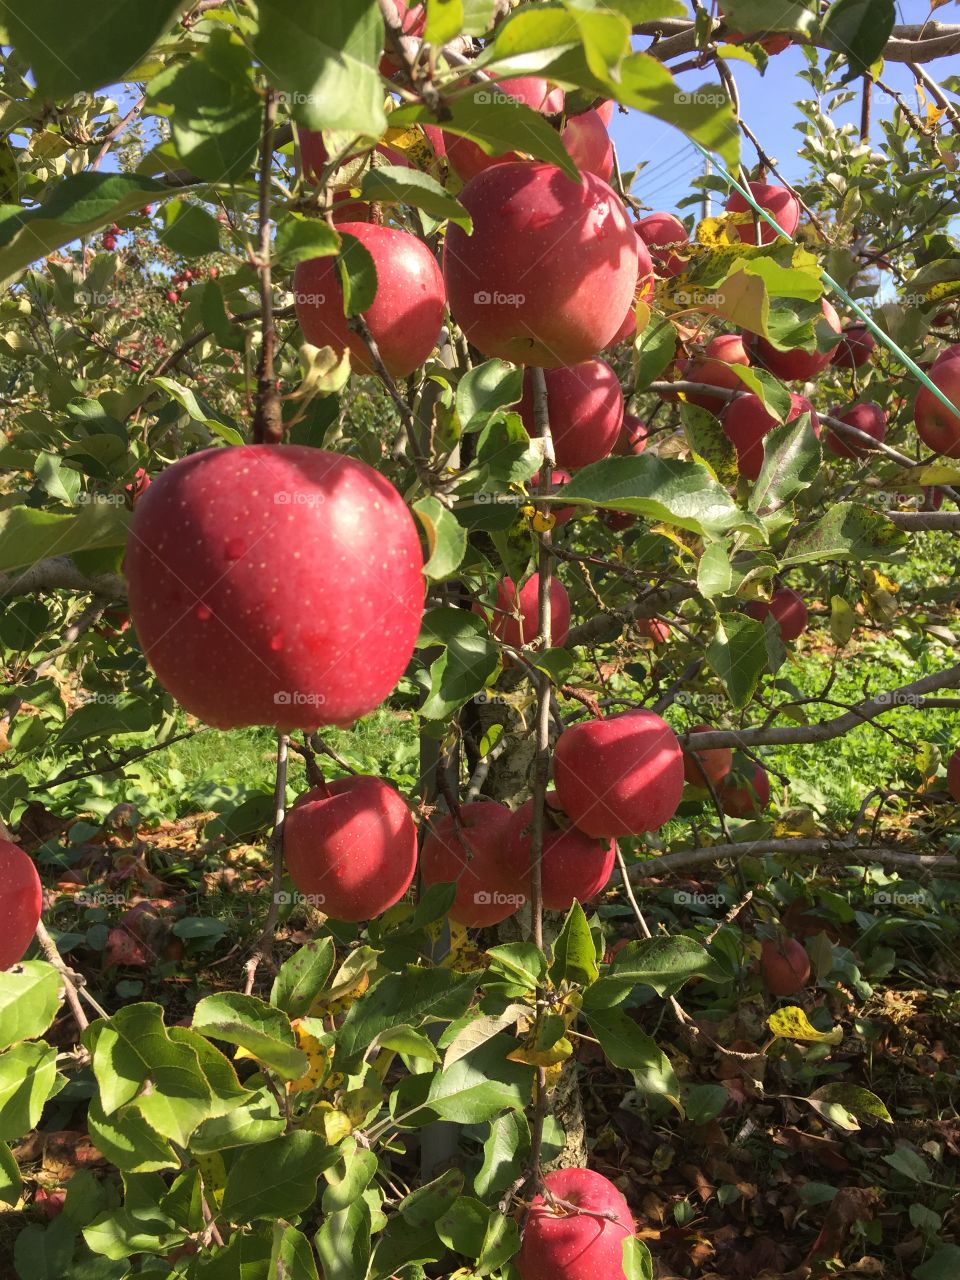 Apple picking in Aomori